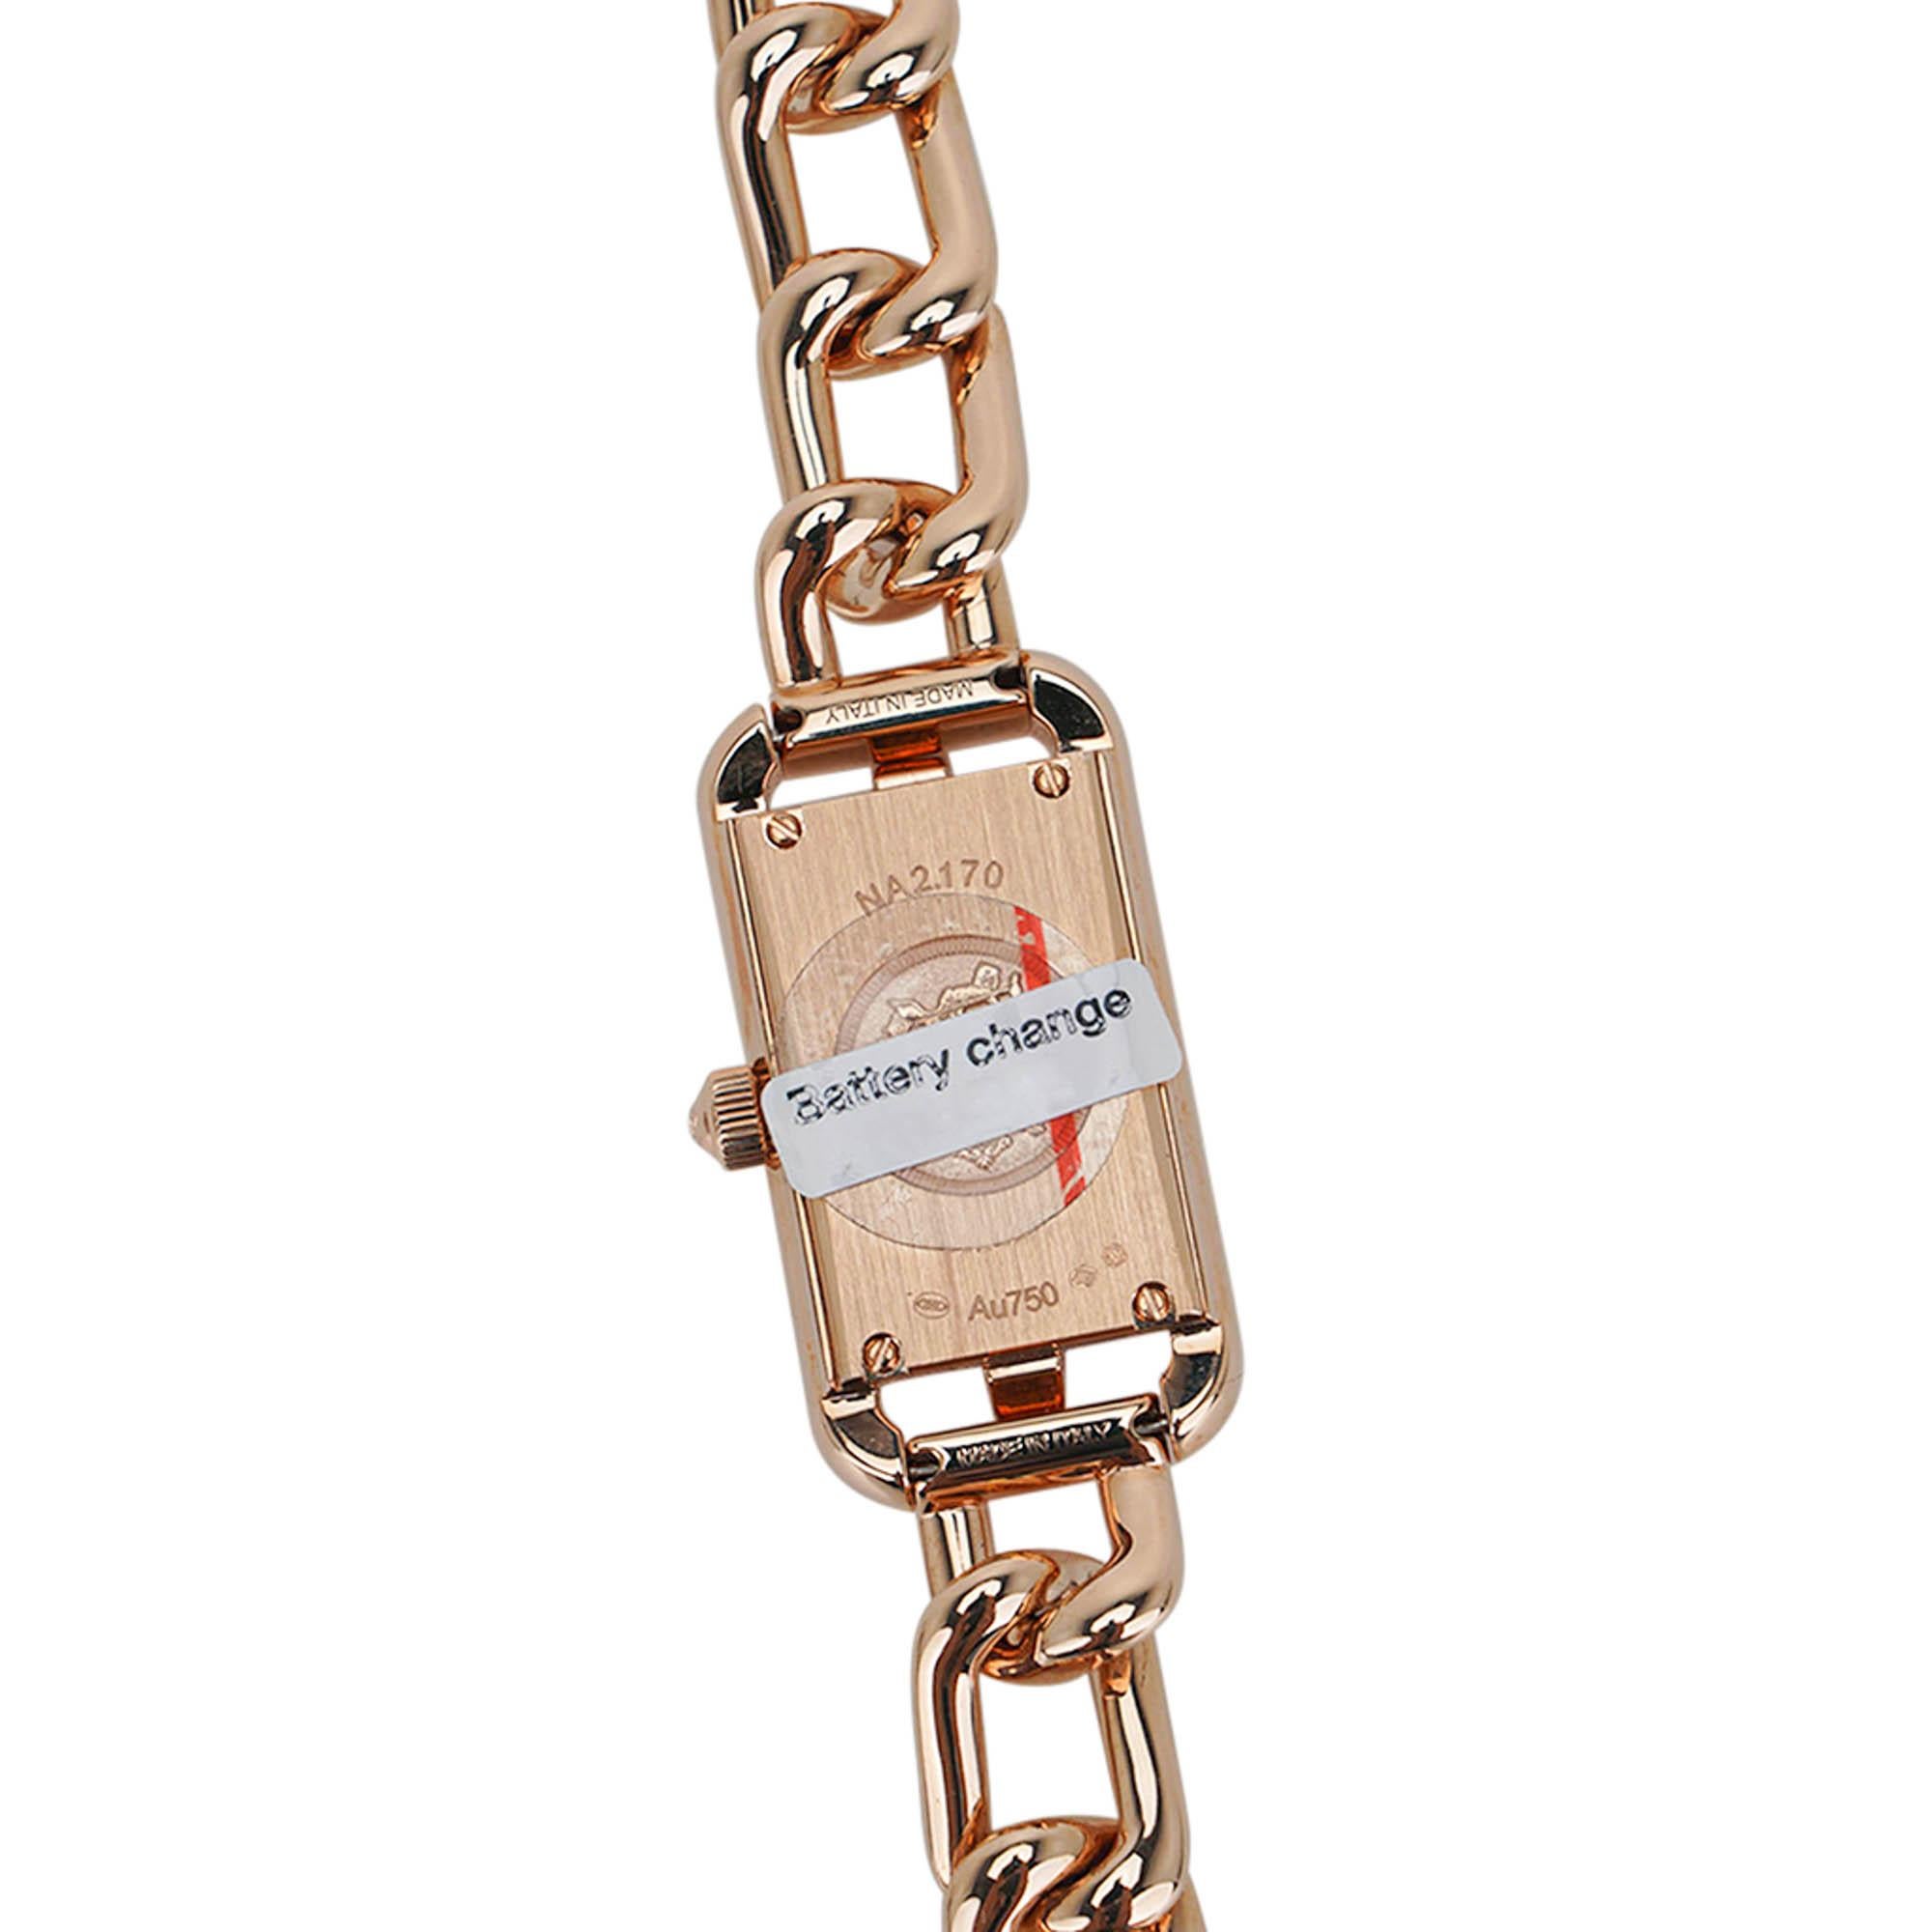 Hermes Watch Nantucket Rose Gold 18k Small Model For Sale 2